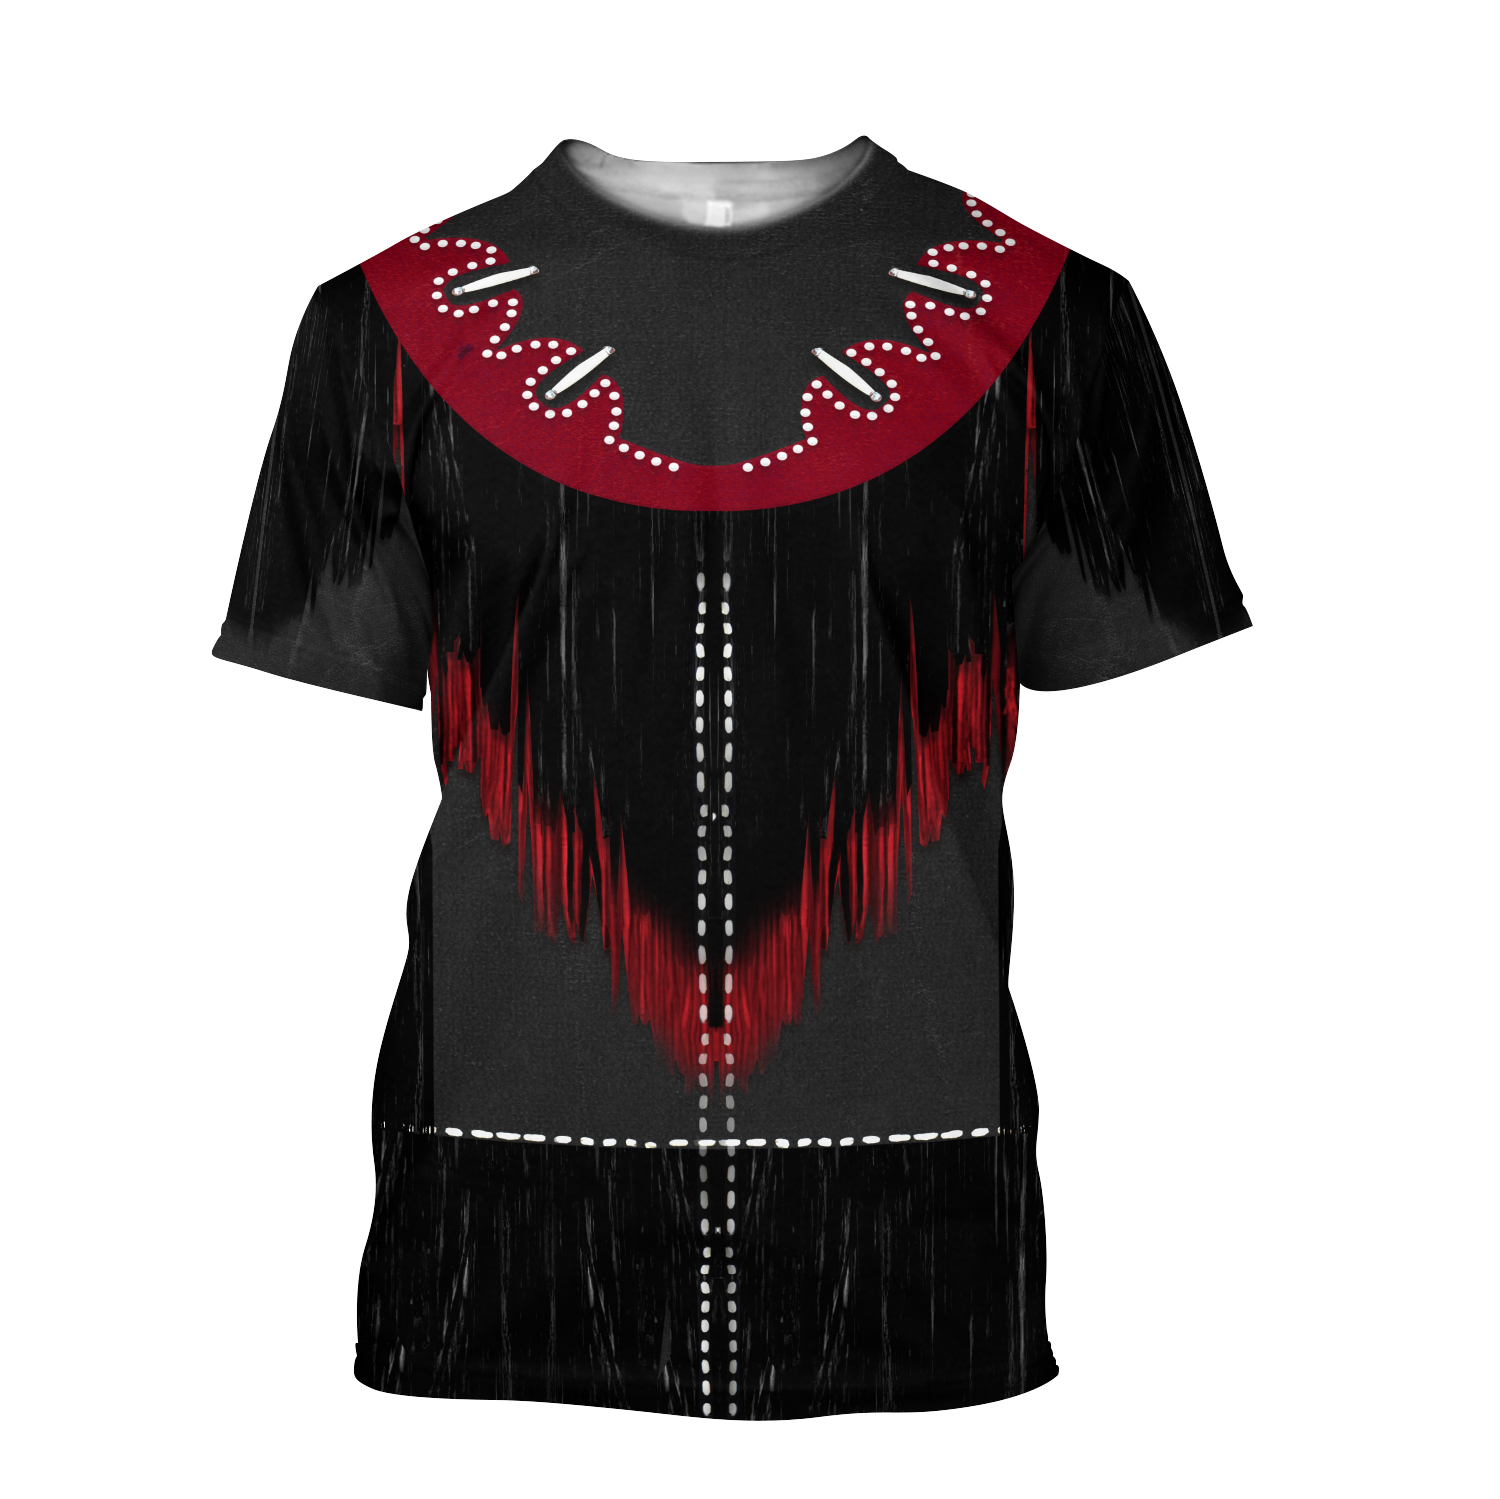 Black And Red Cowboy Shirt No Cosplay 3D Over Printed Unisex Premium Cowboy Shirts